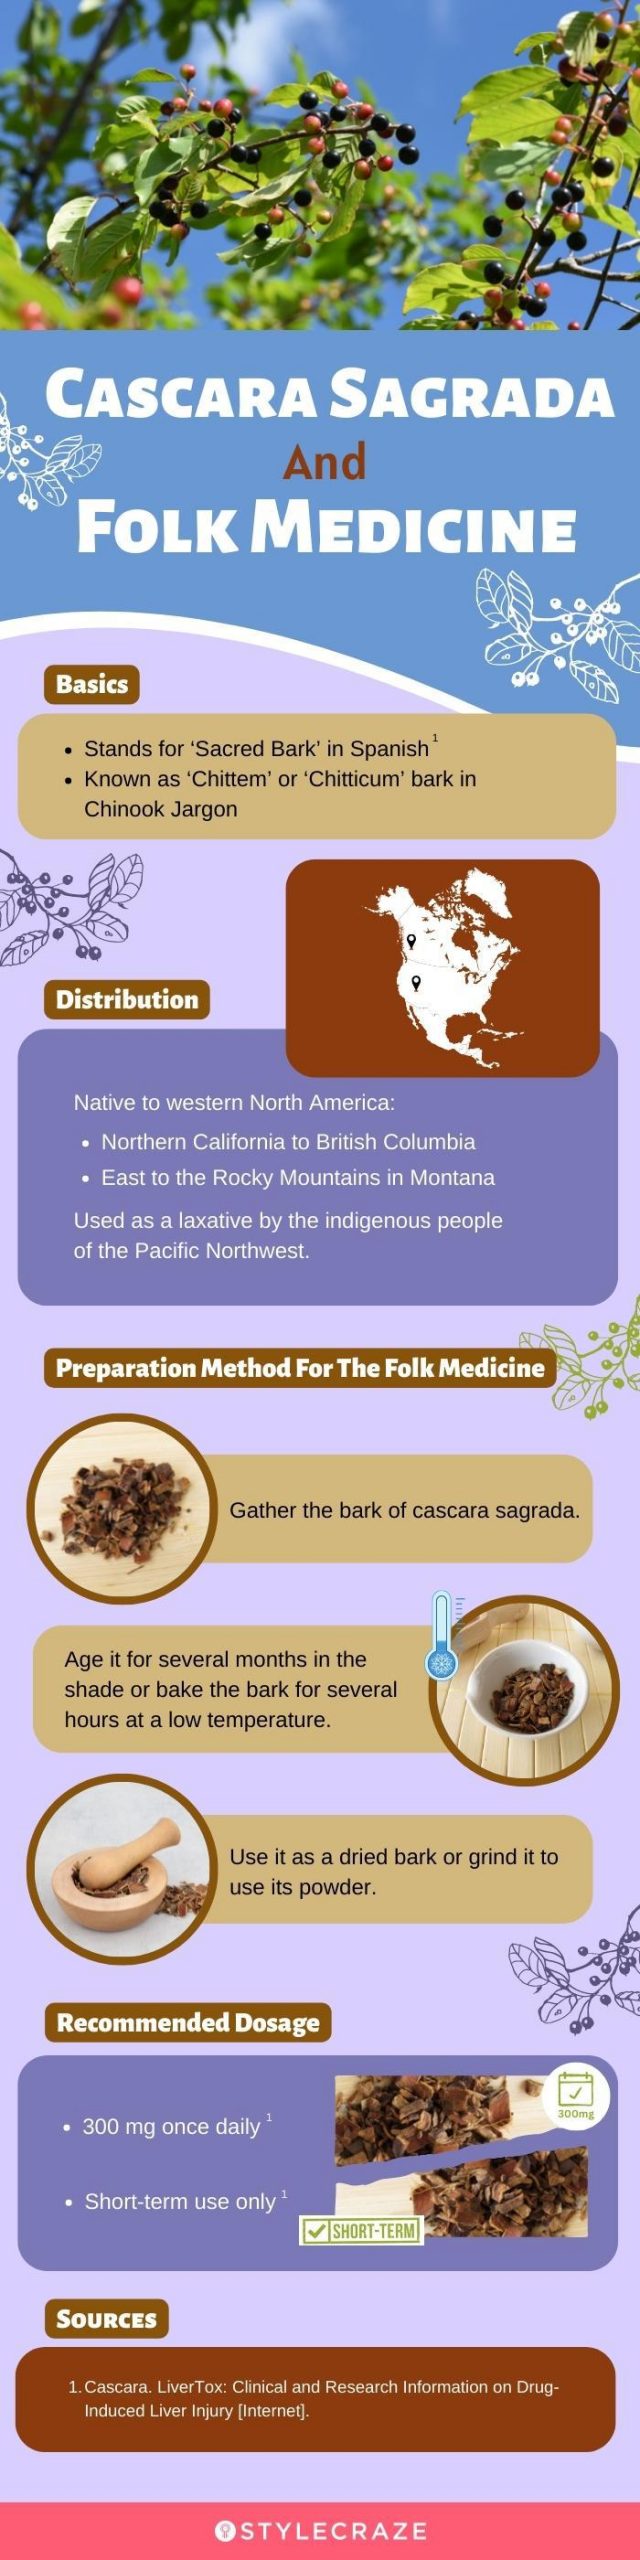 cascara sagrada and folk medicine [infographic]